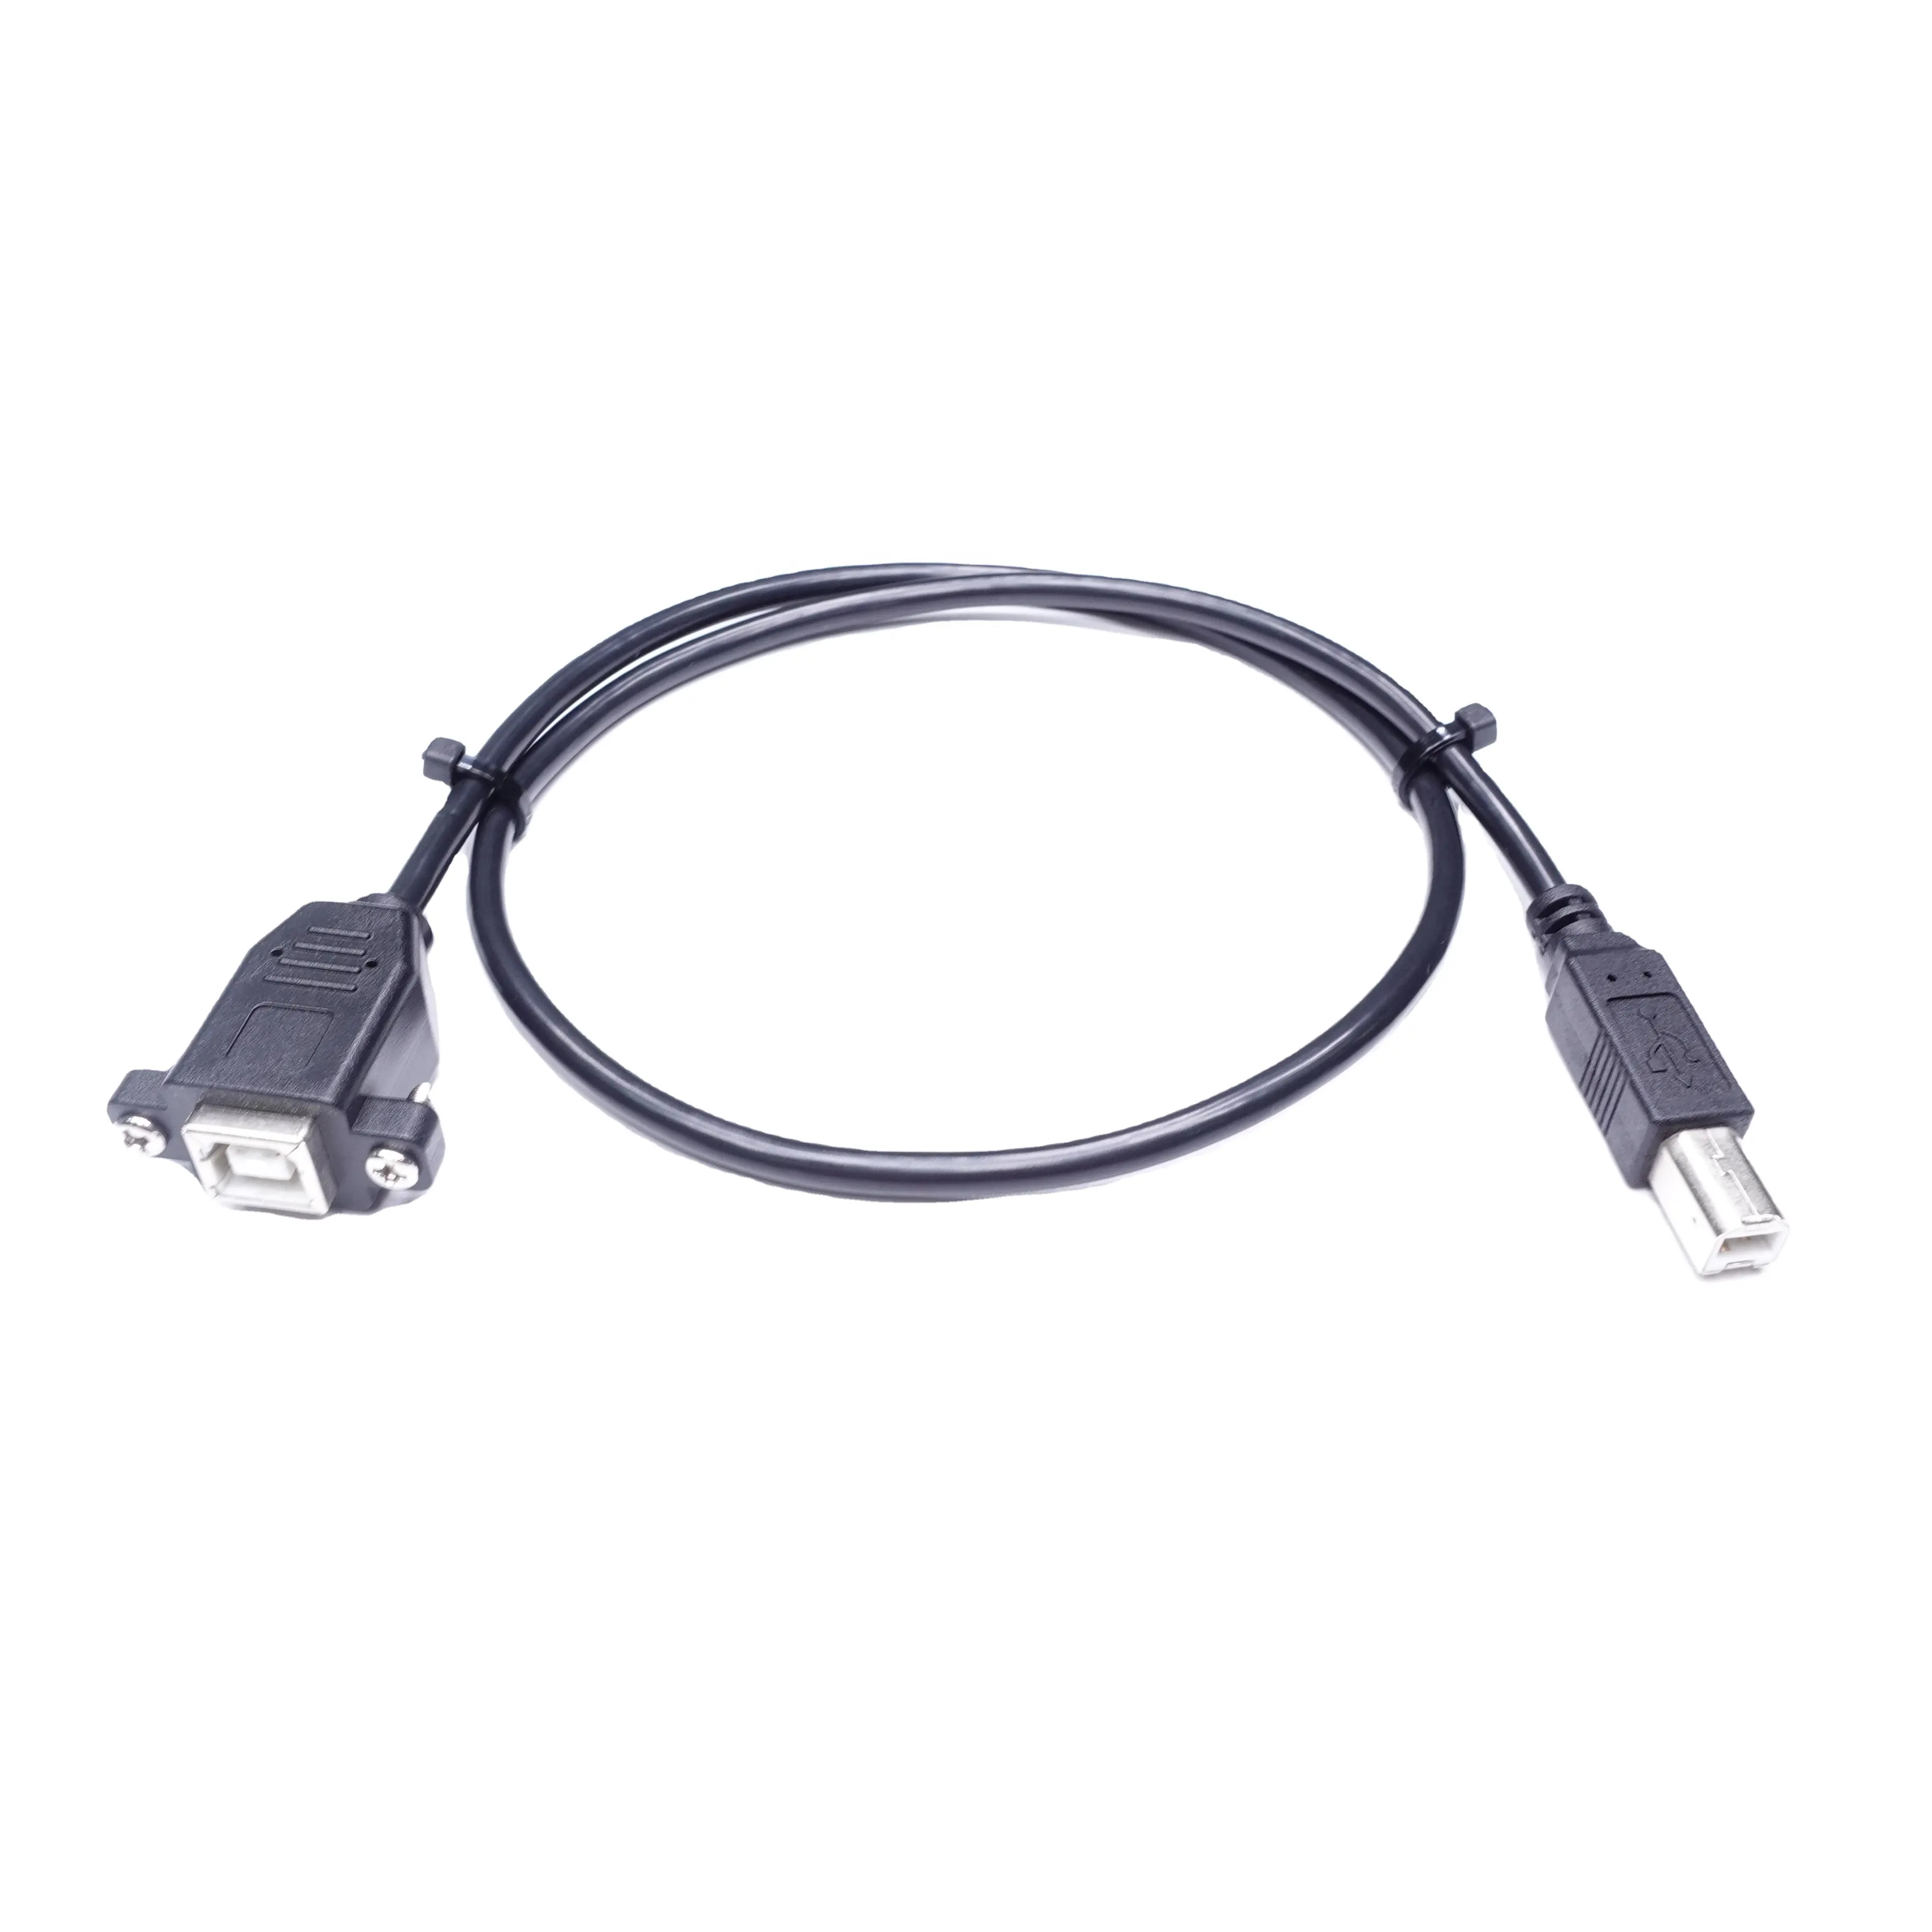 Kabel USB 3.0 B betina Ke 2.0, rakitan kabel USB isolasi ganda dan tali pengisi daya